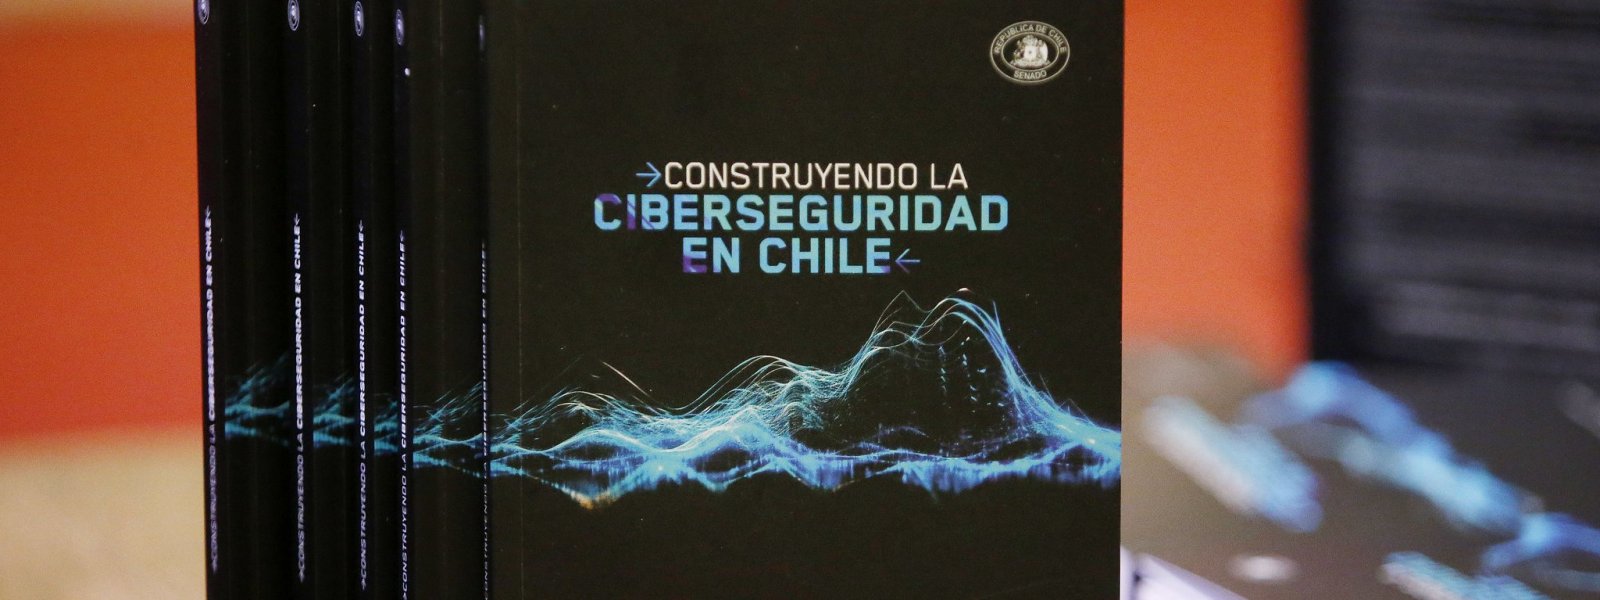 Senado lanza Foro Nacional de Ciberseguridad en Chile